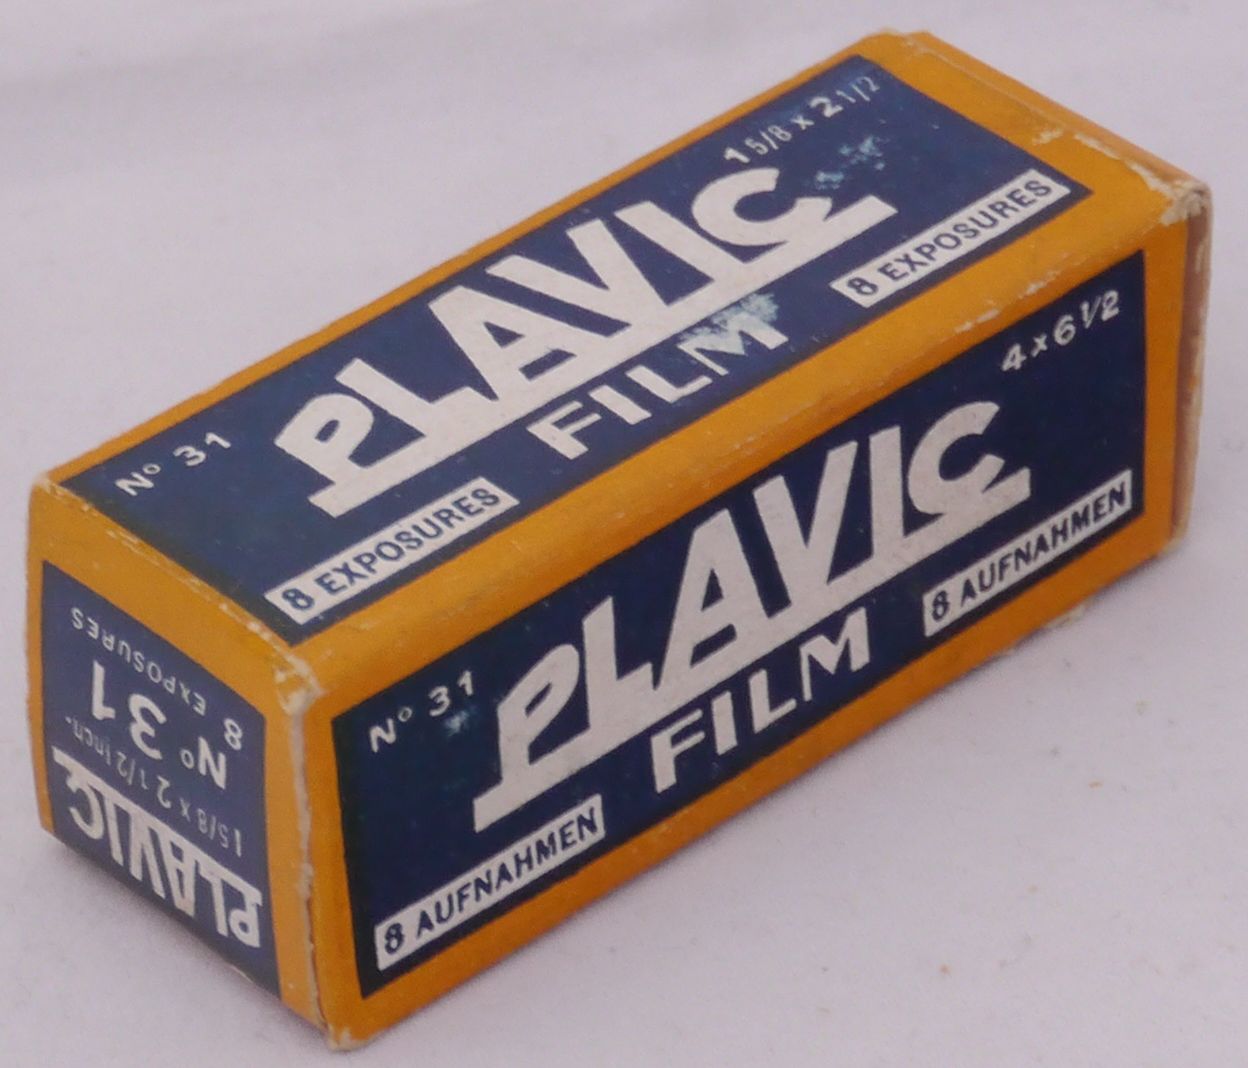 Plavic n°31 - format 4x6,5 cm